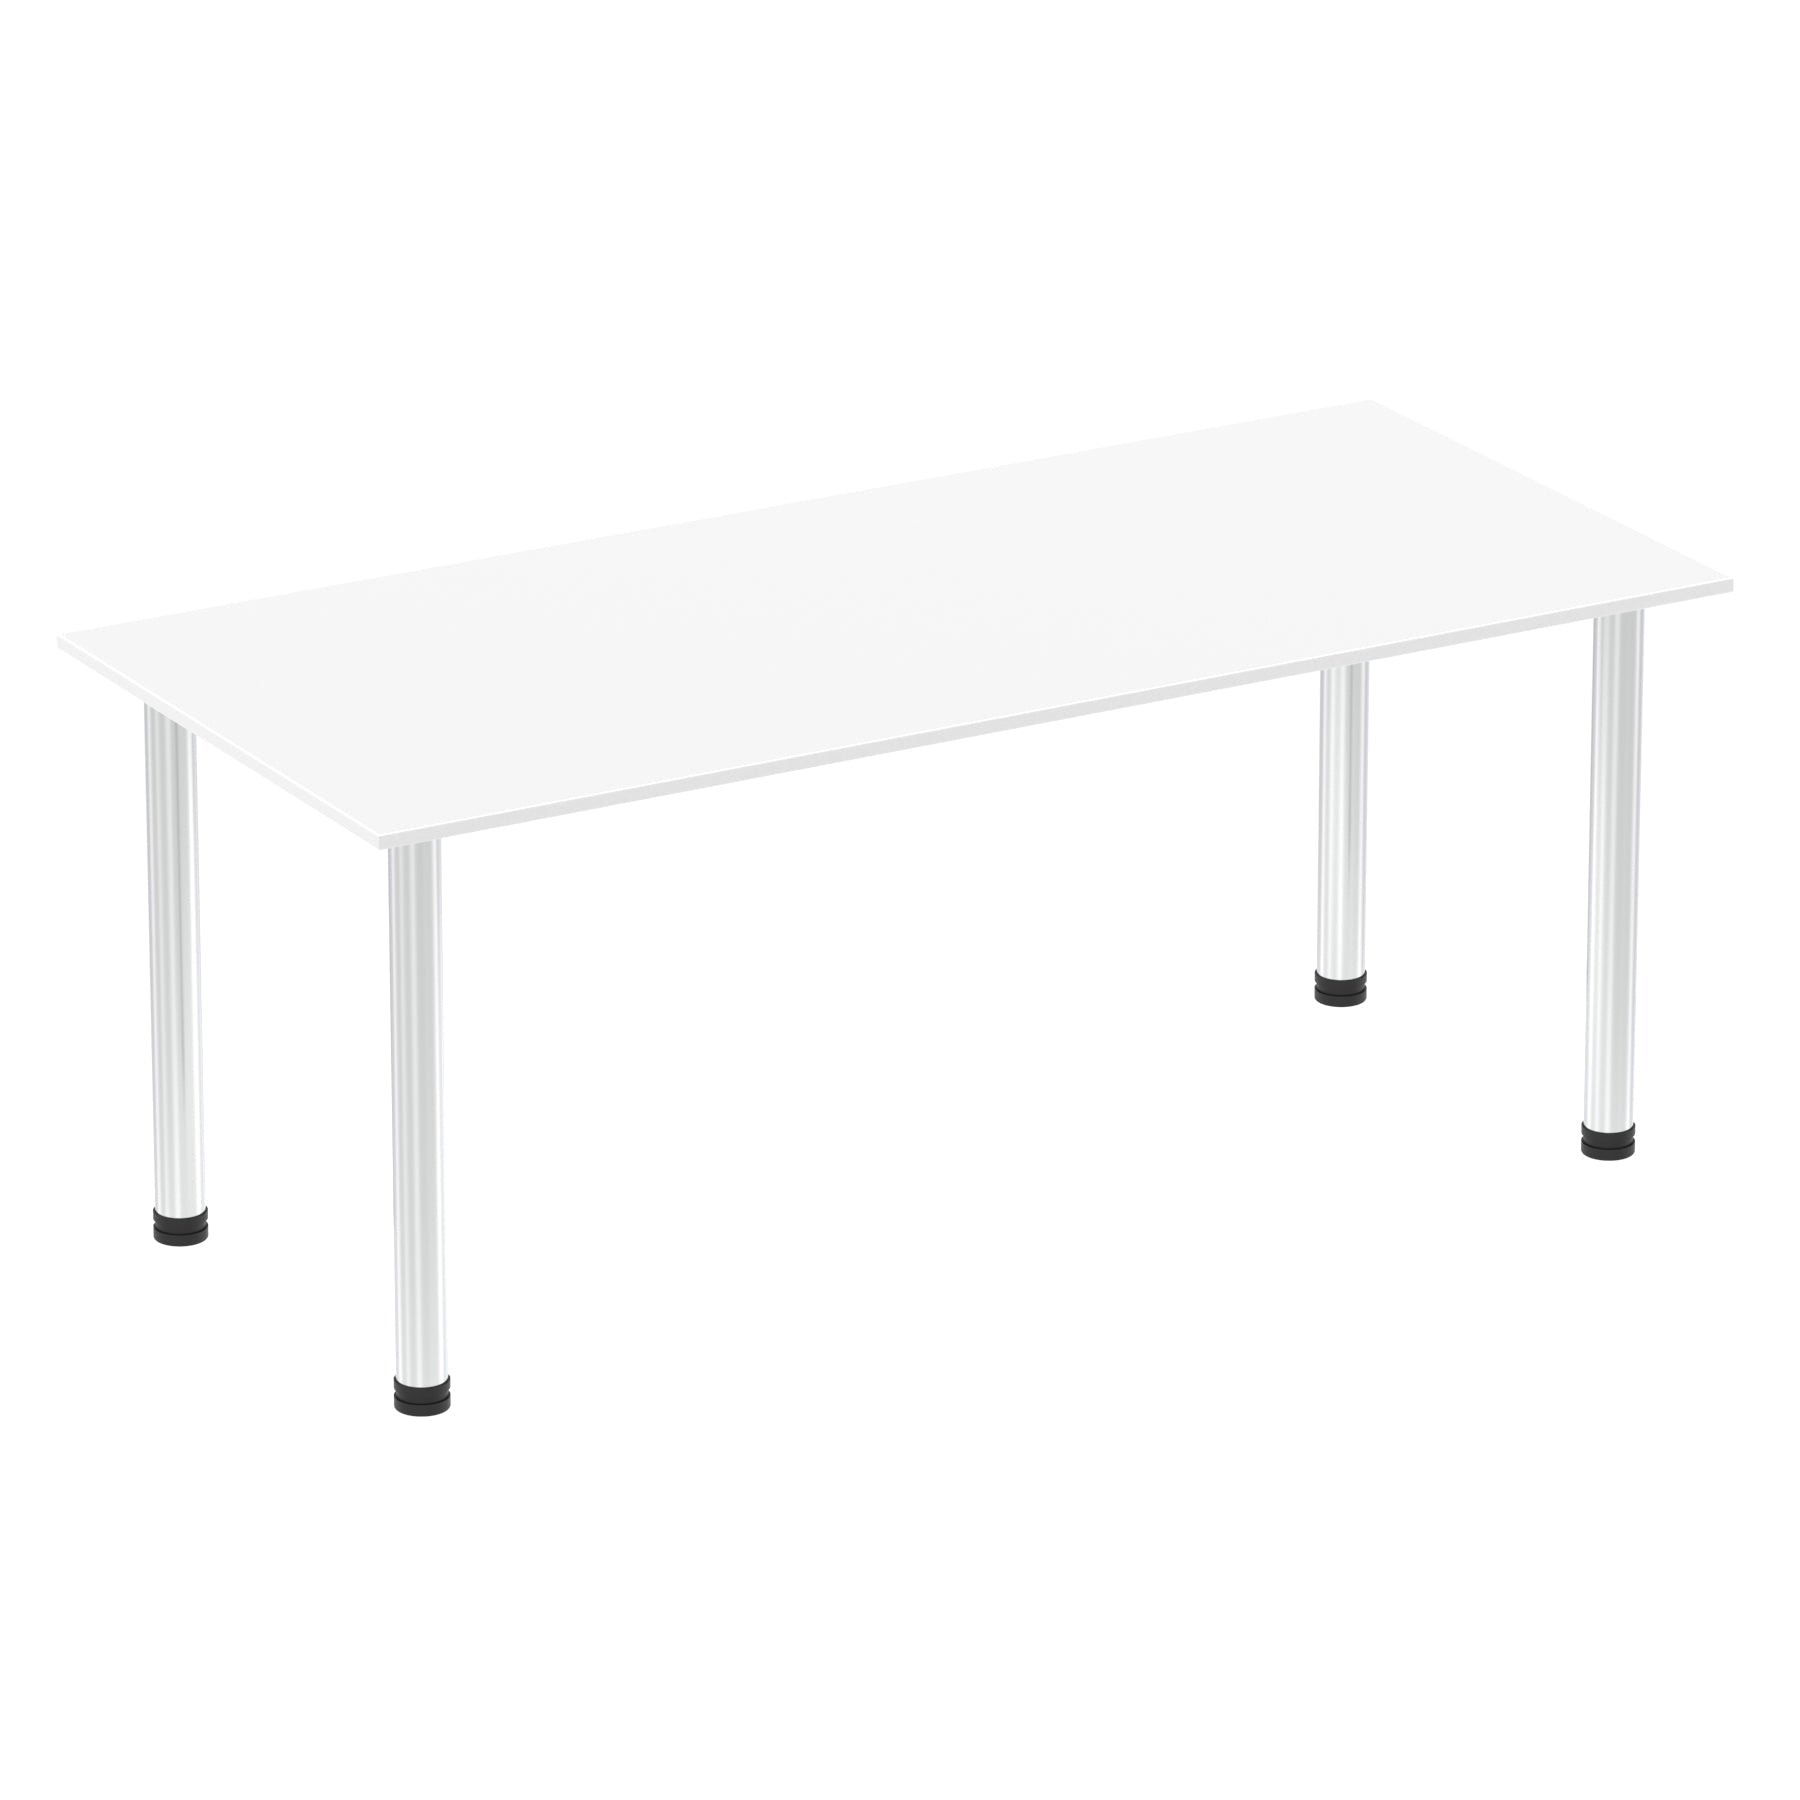 Impulse 1800mm Straight Post Leg Table - Rectangular MFC Desk, 5-Year Guarantee, Self-Assembly, Multiple Frame Colors